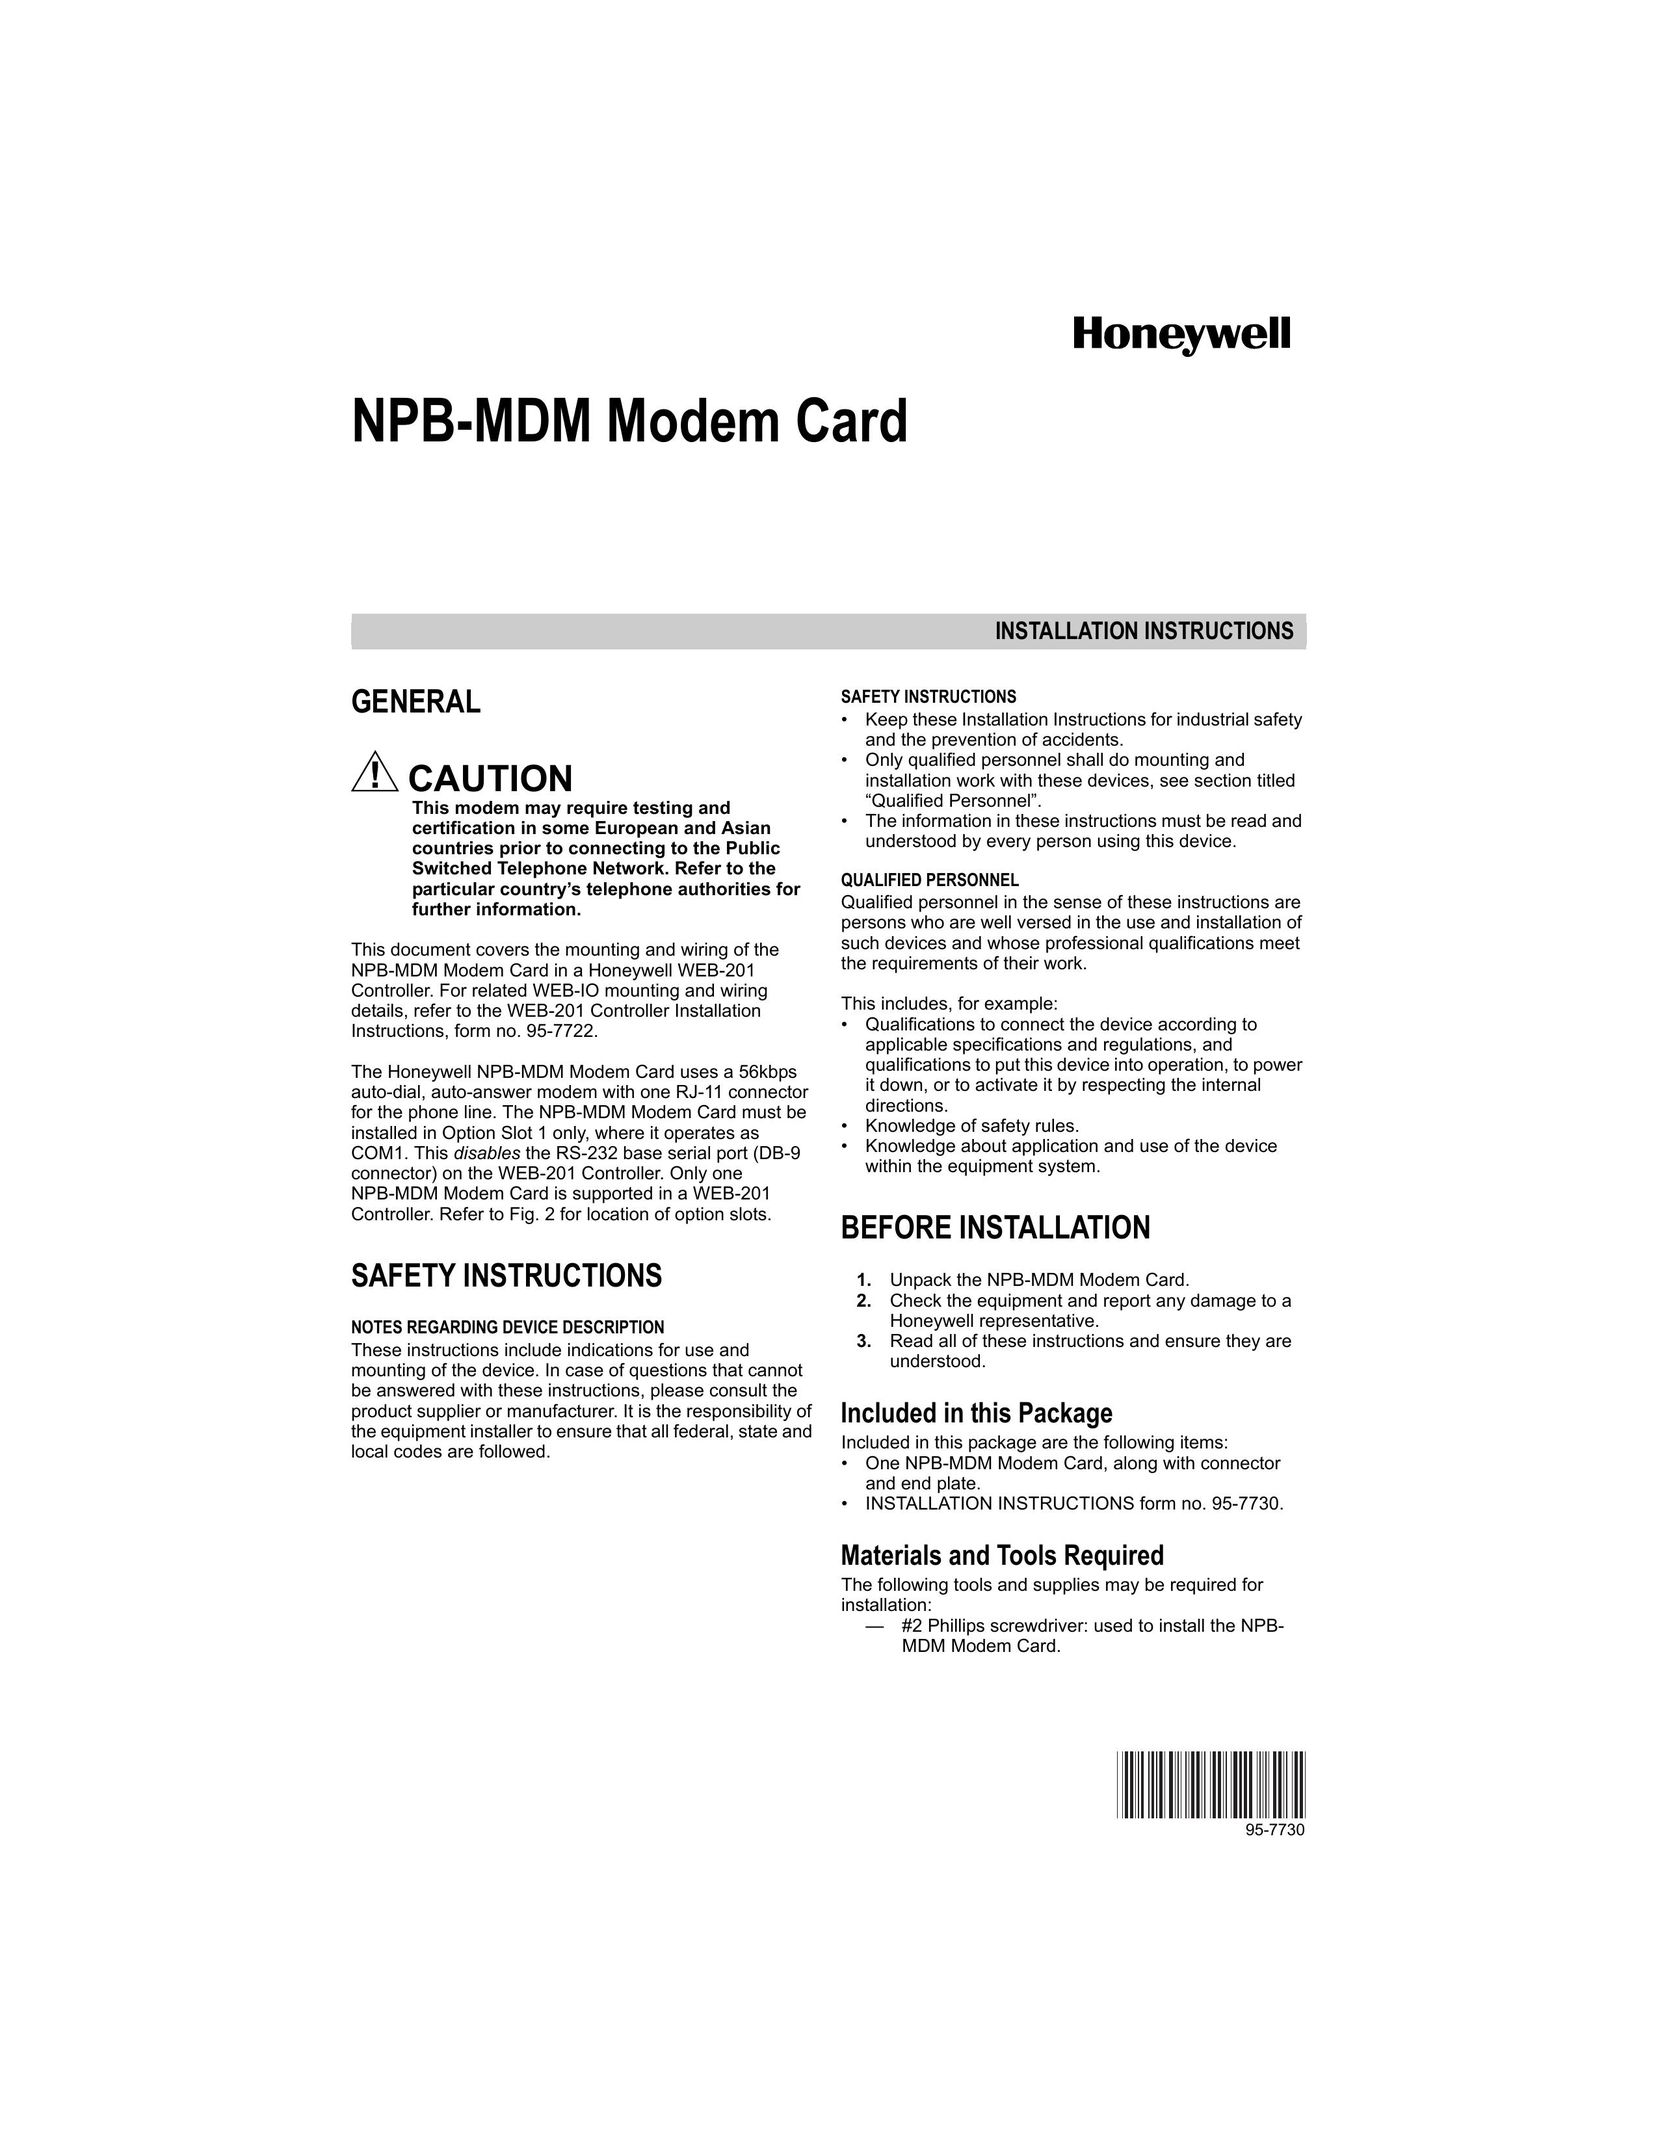 Honeywell NPB-MDM Modem User Manual